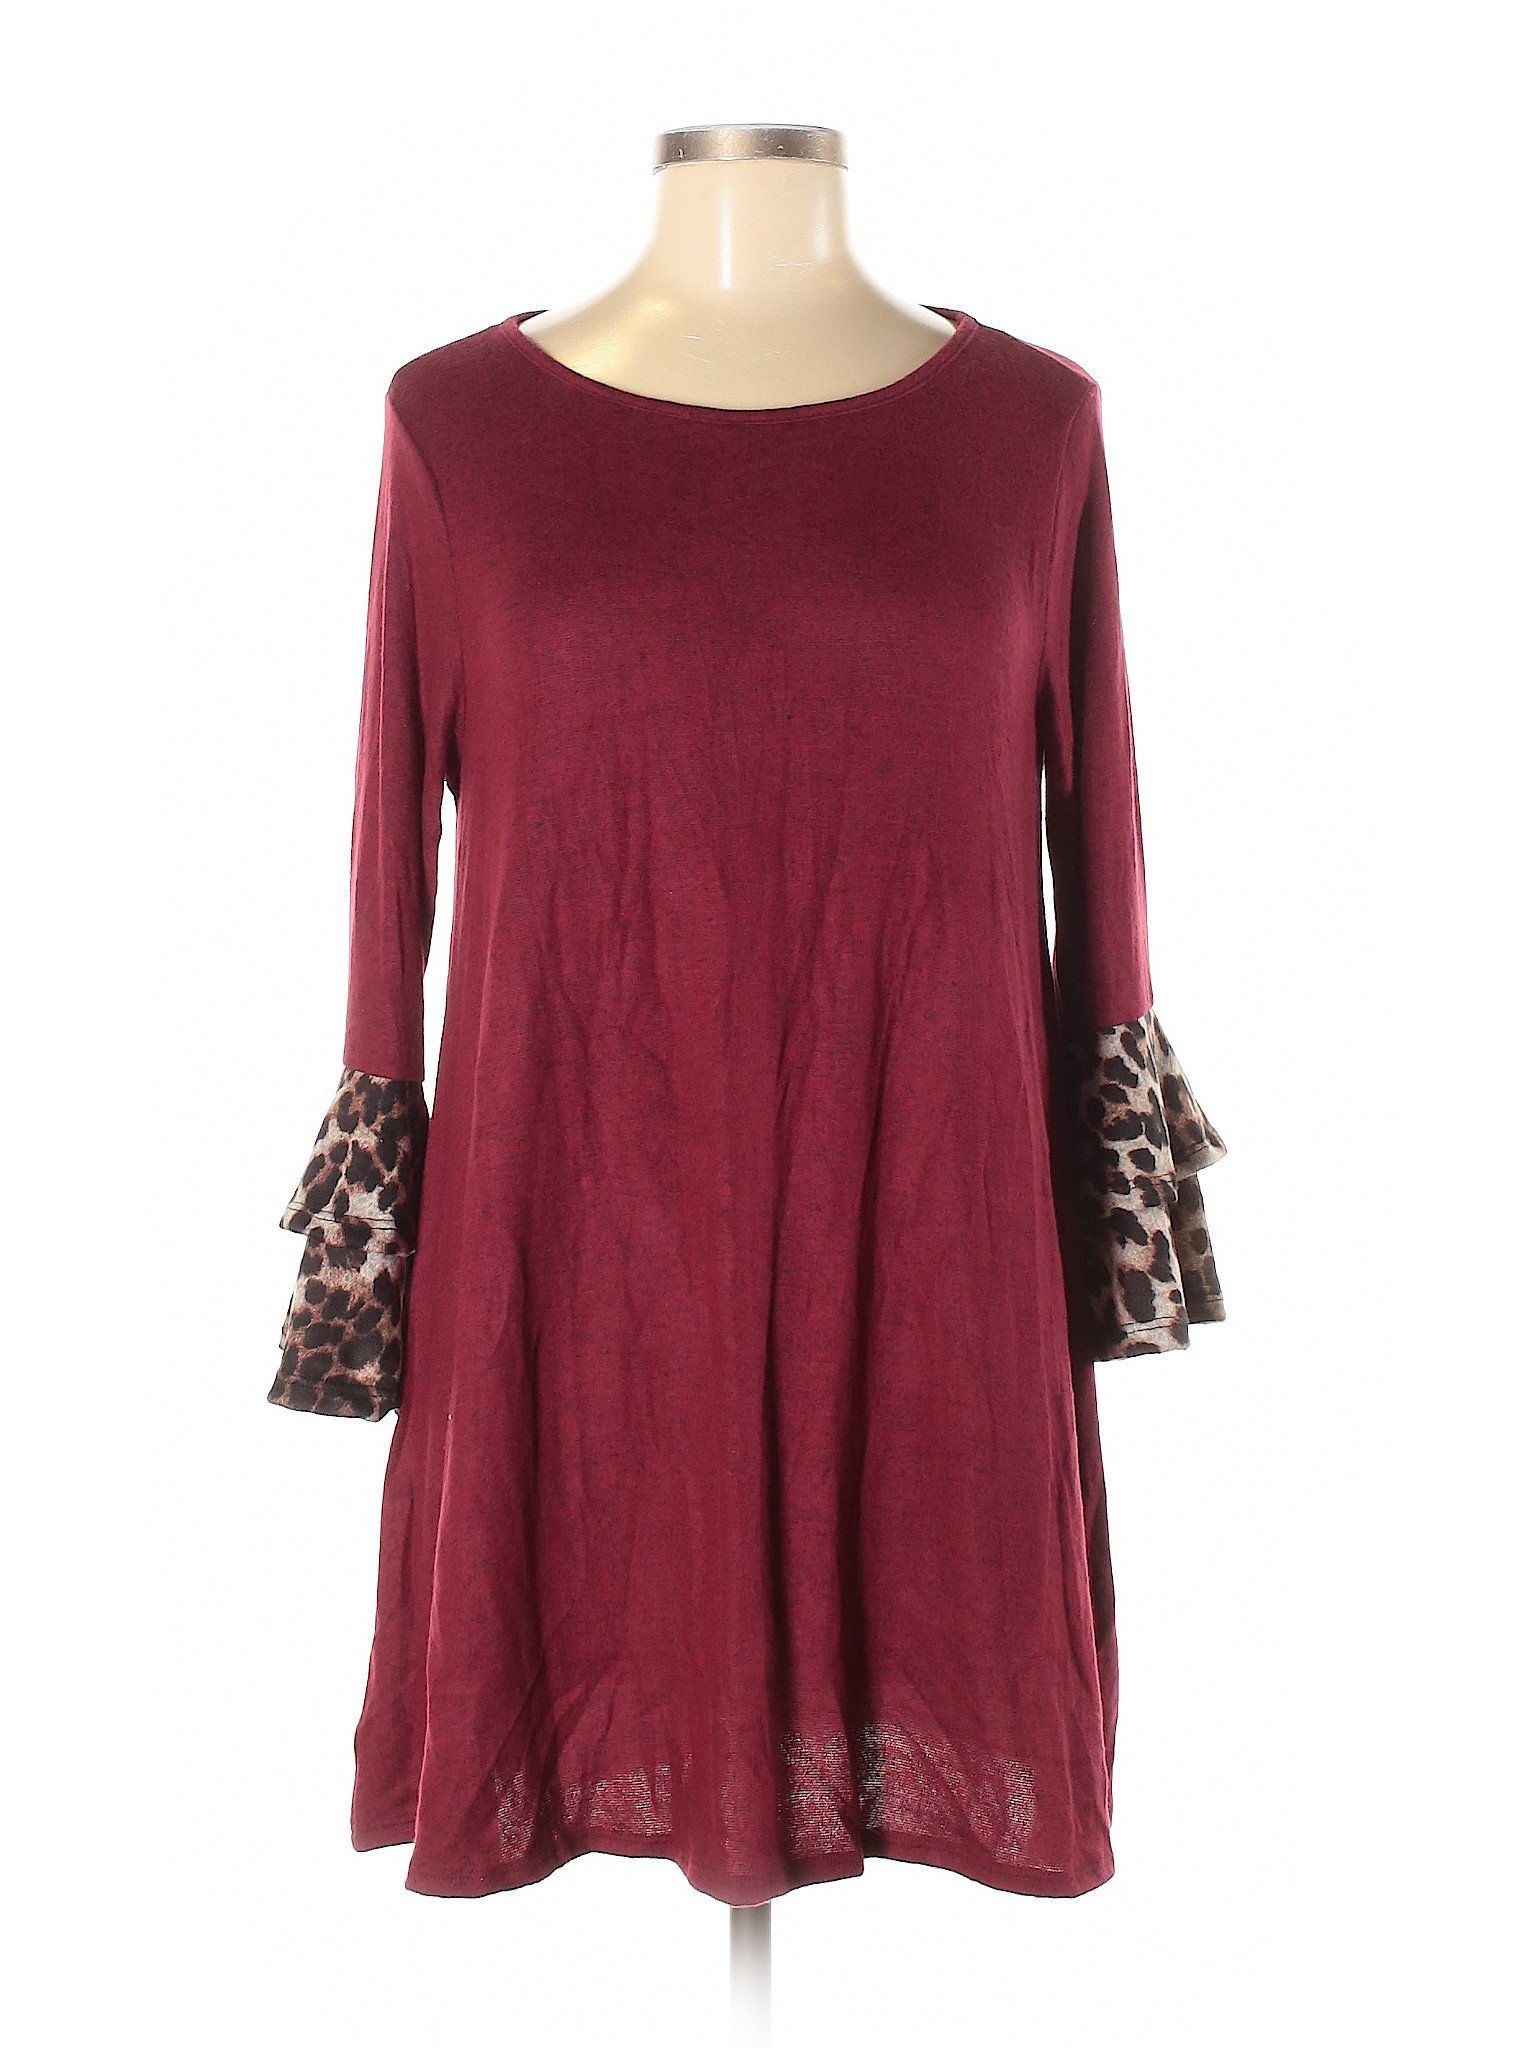 Riah Fashion Women Red Casual Dress M | eBay